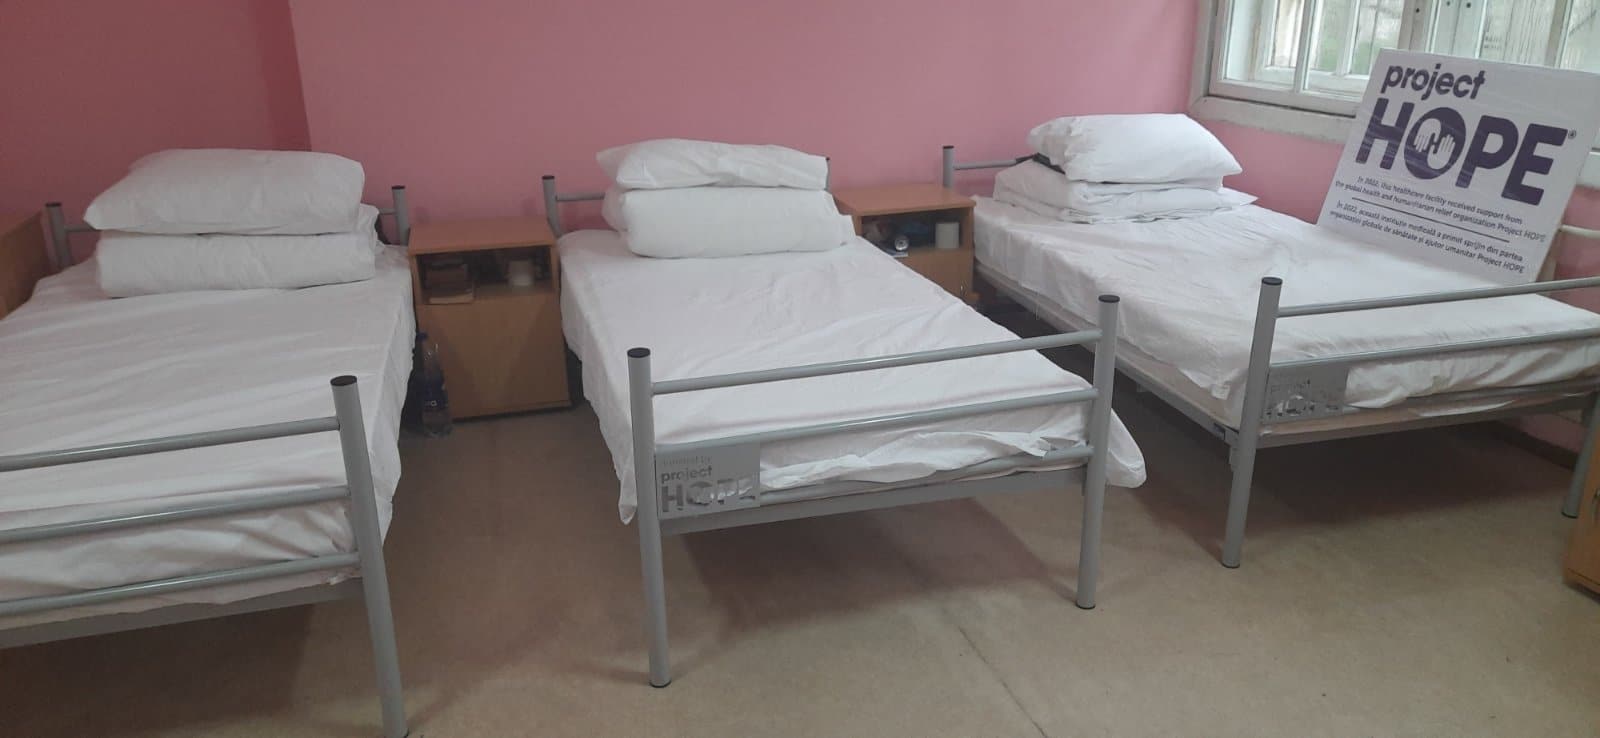 three made beds in Ukraine